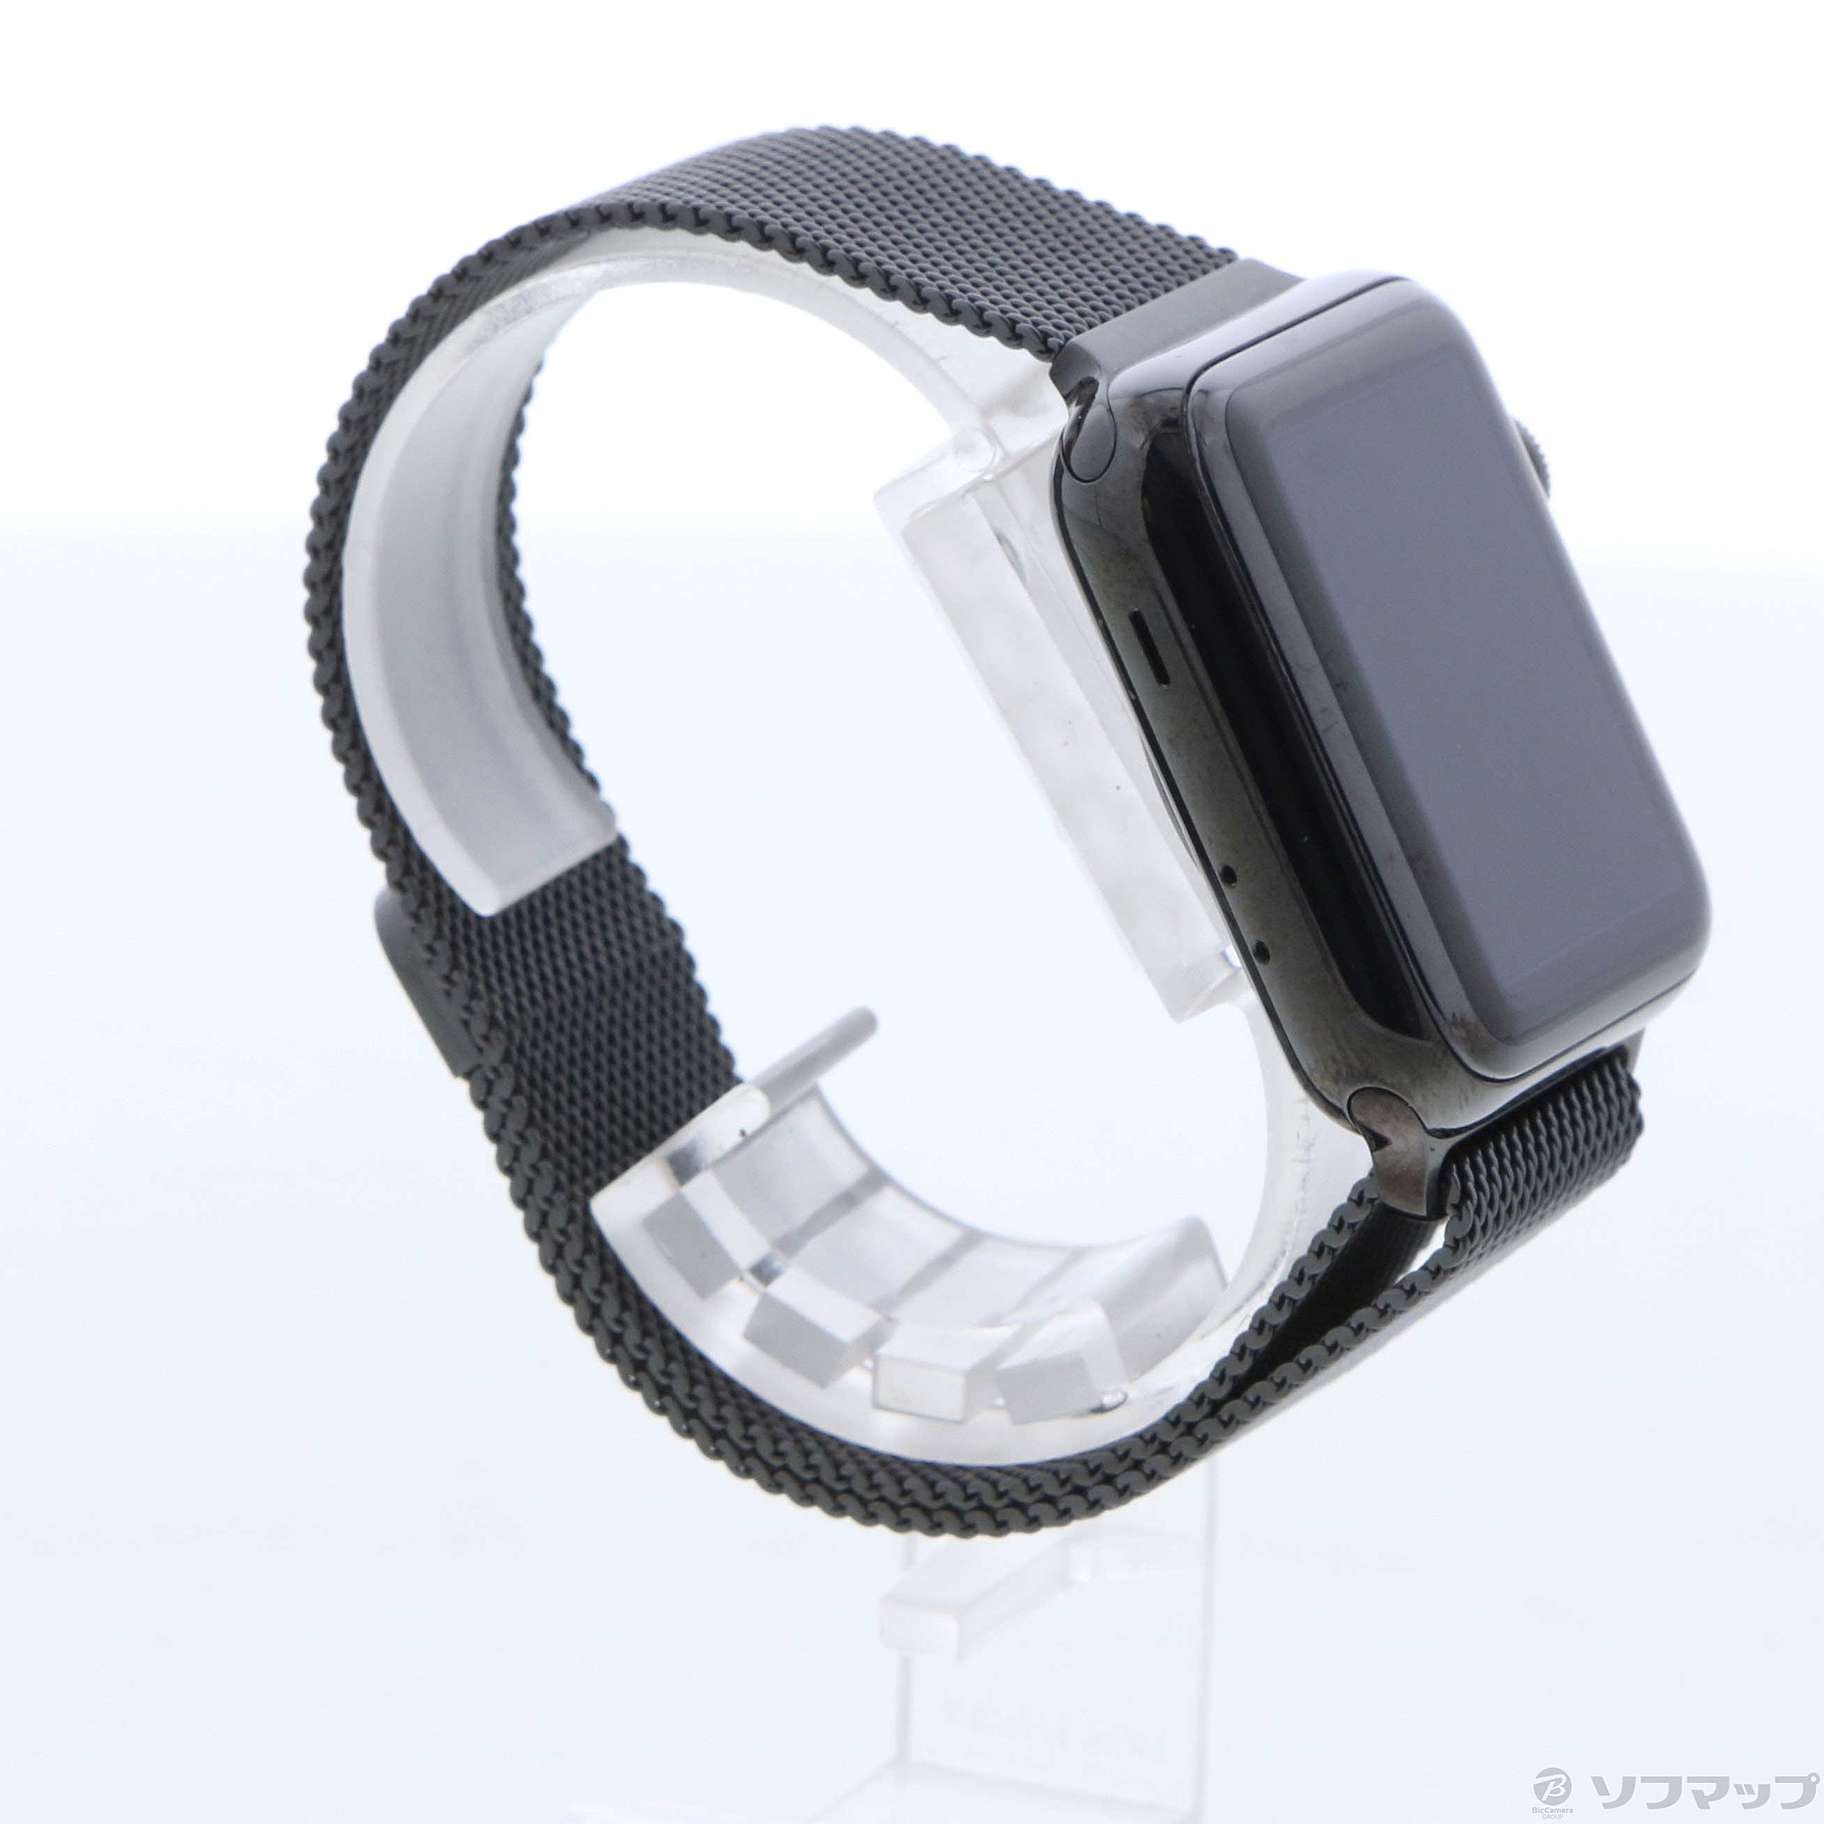 Apple Watch series 2 38mmCase / Black